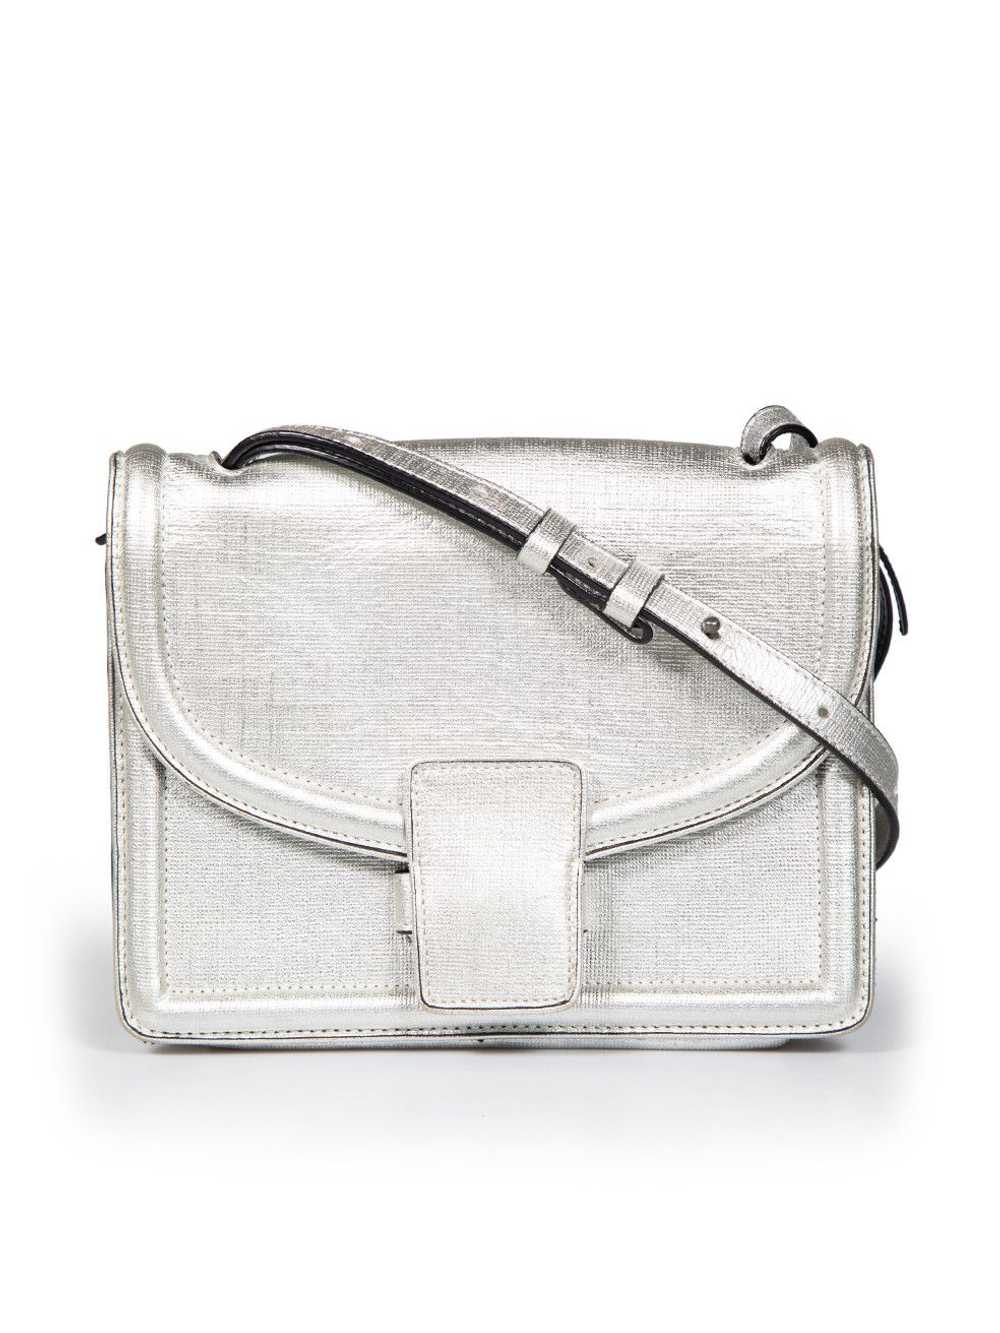 Dries Van Noten Silver Leather Flap Crossbody Bag - image 1